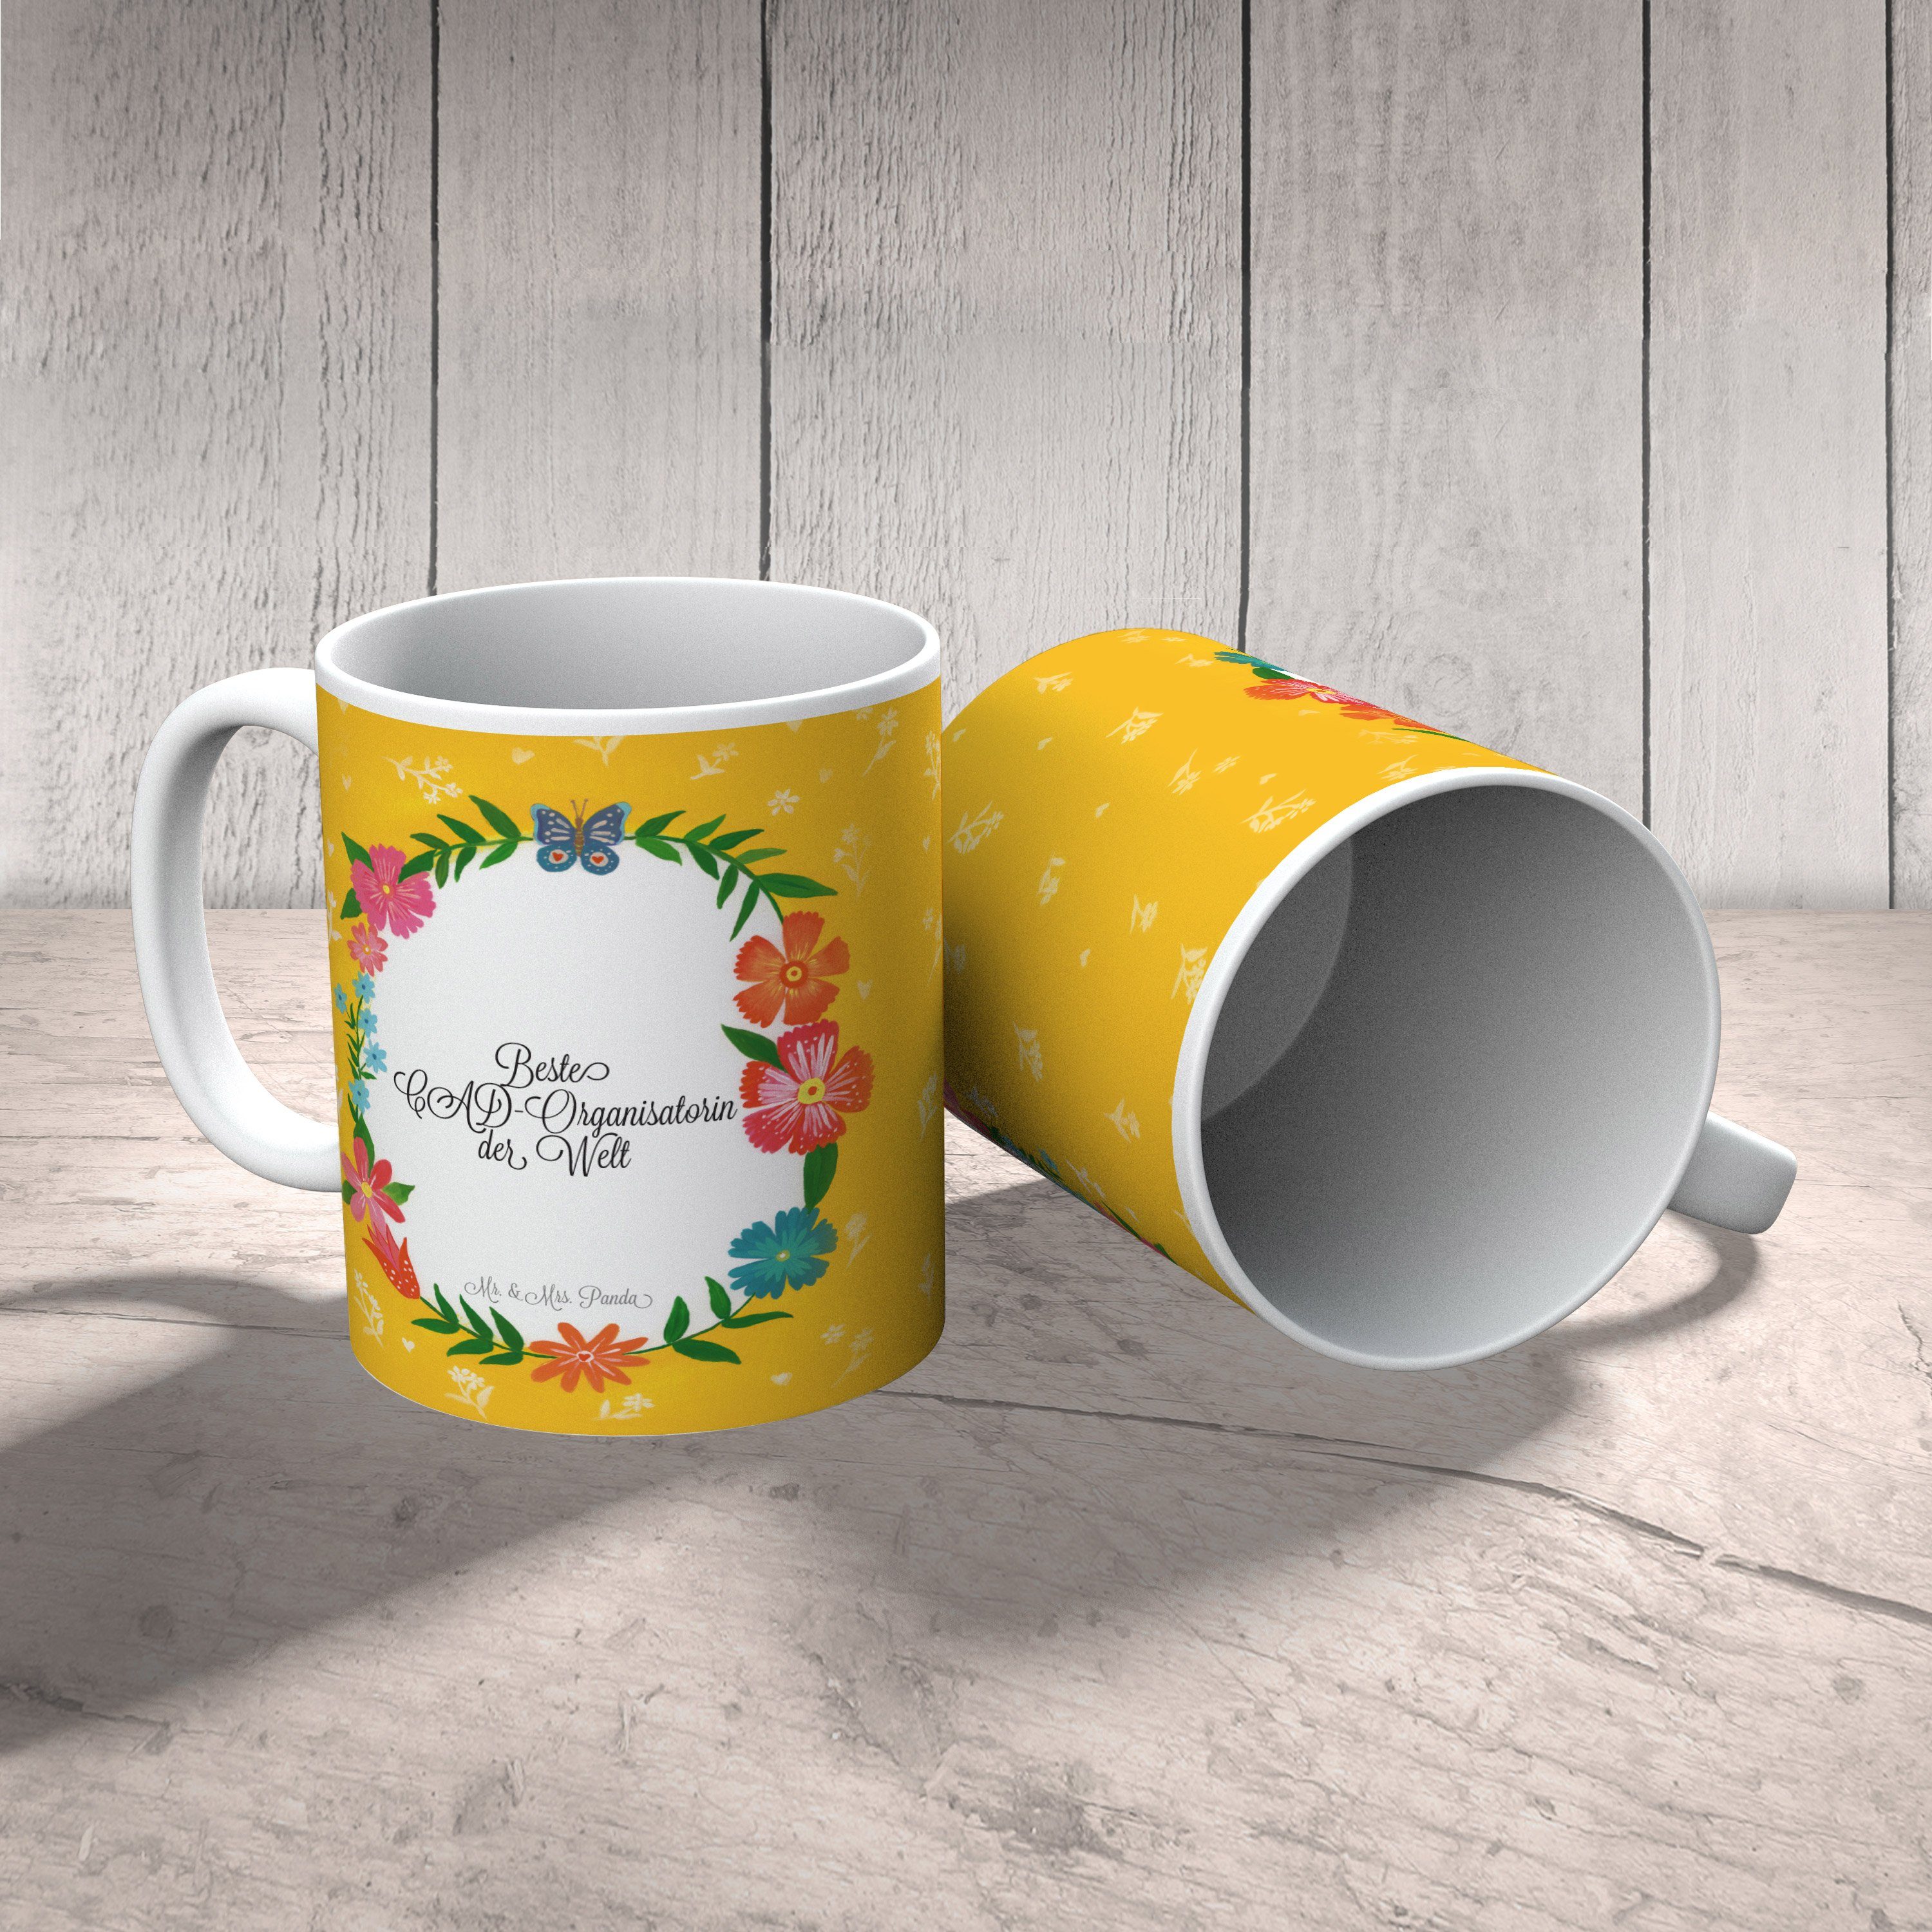 Tasse Tasse Tasse, Panda Geschenk, CAD-Organisatorin Mr. Mrs. & Keramik Motive, - Keramiktasse, Büro